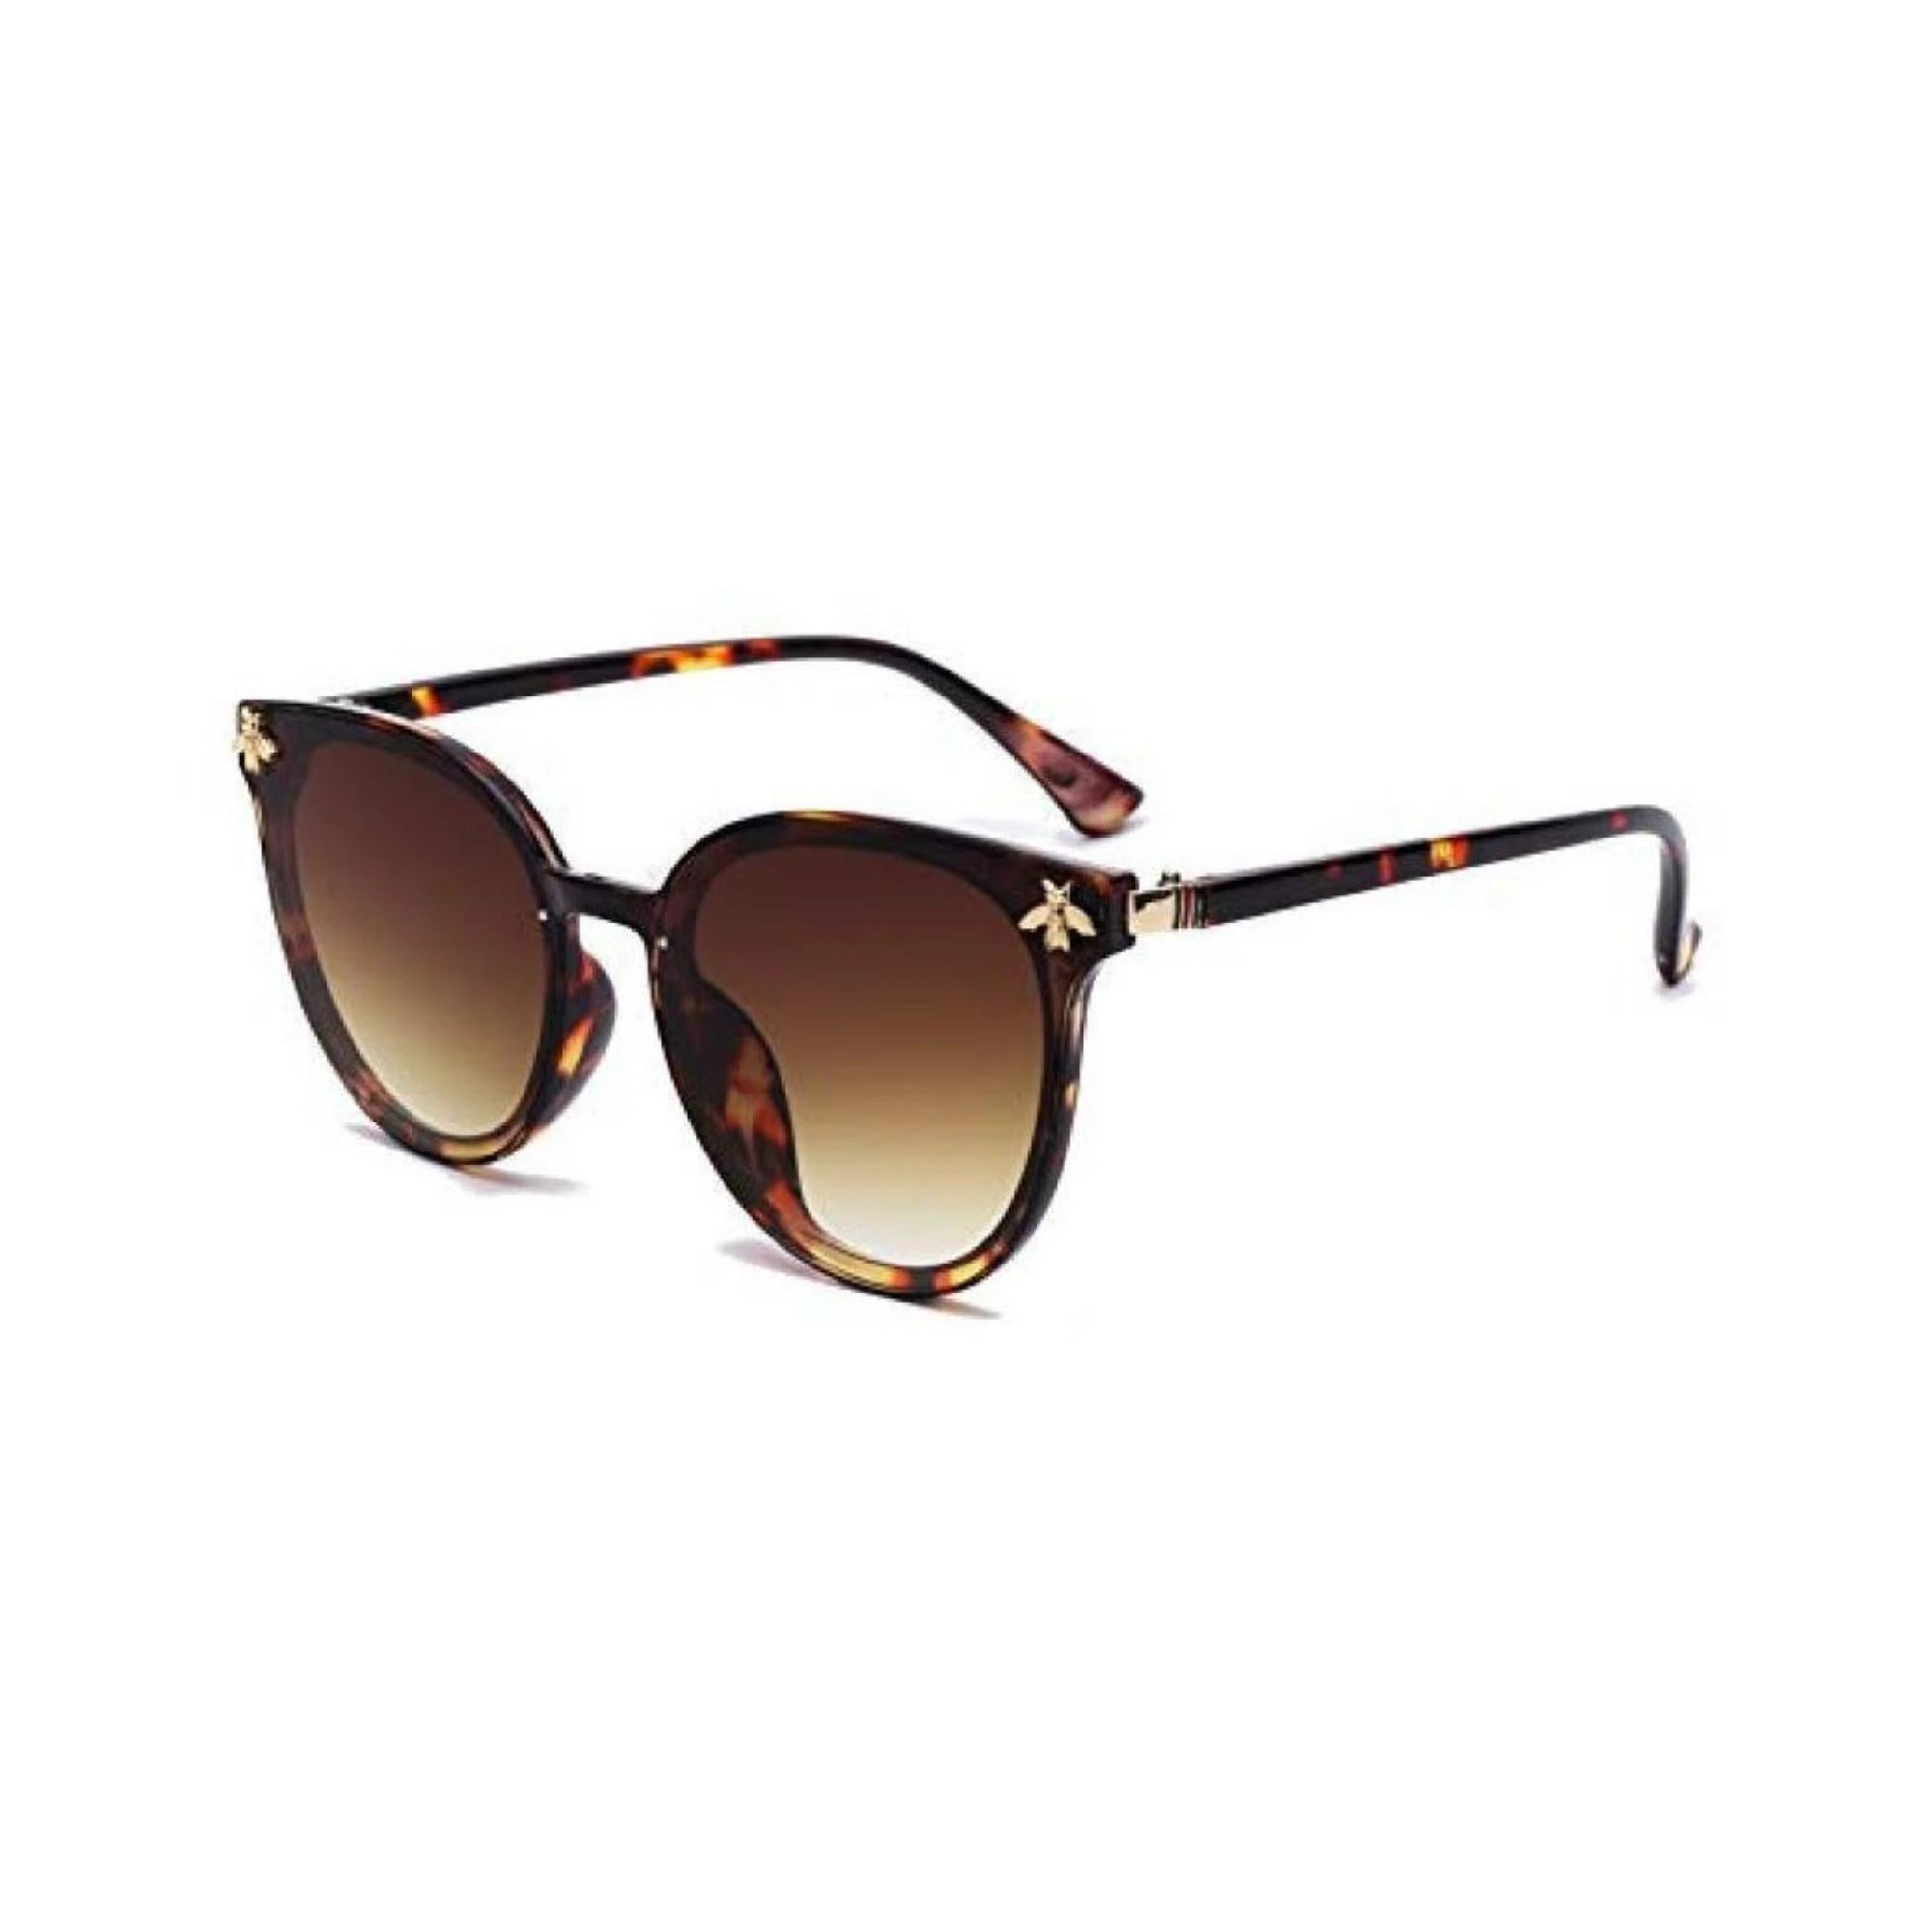 Queen Bee Oval Sunglasses For Women - Leopard Print